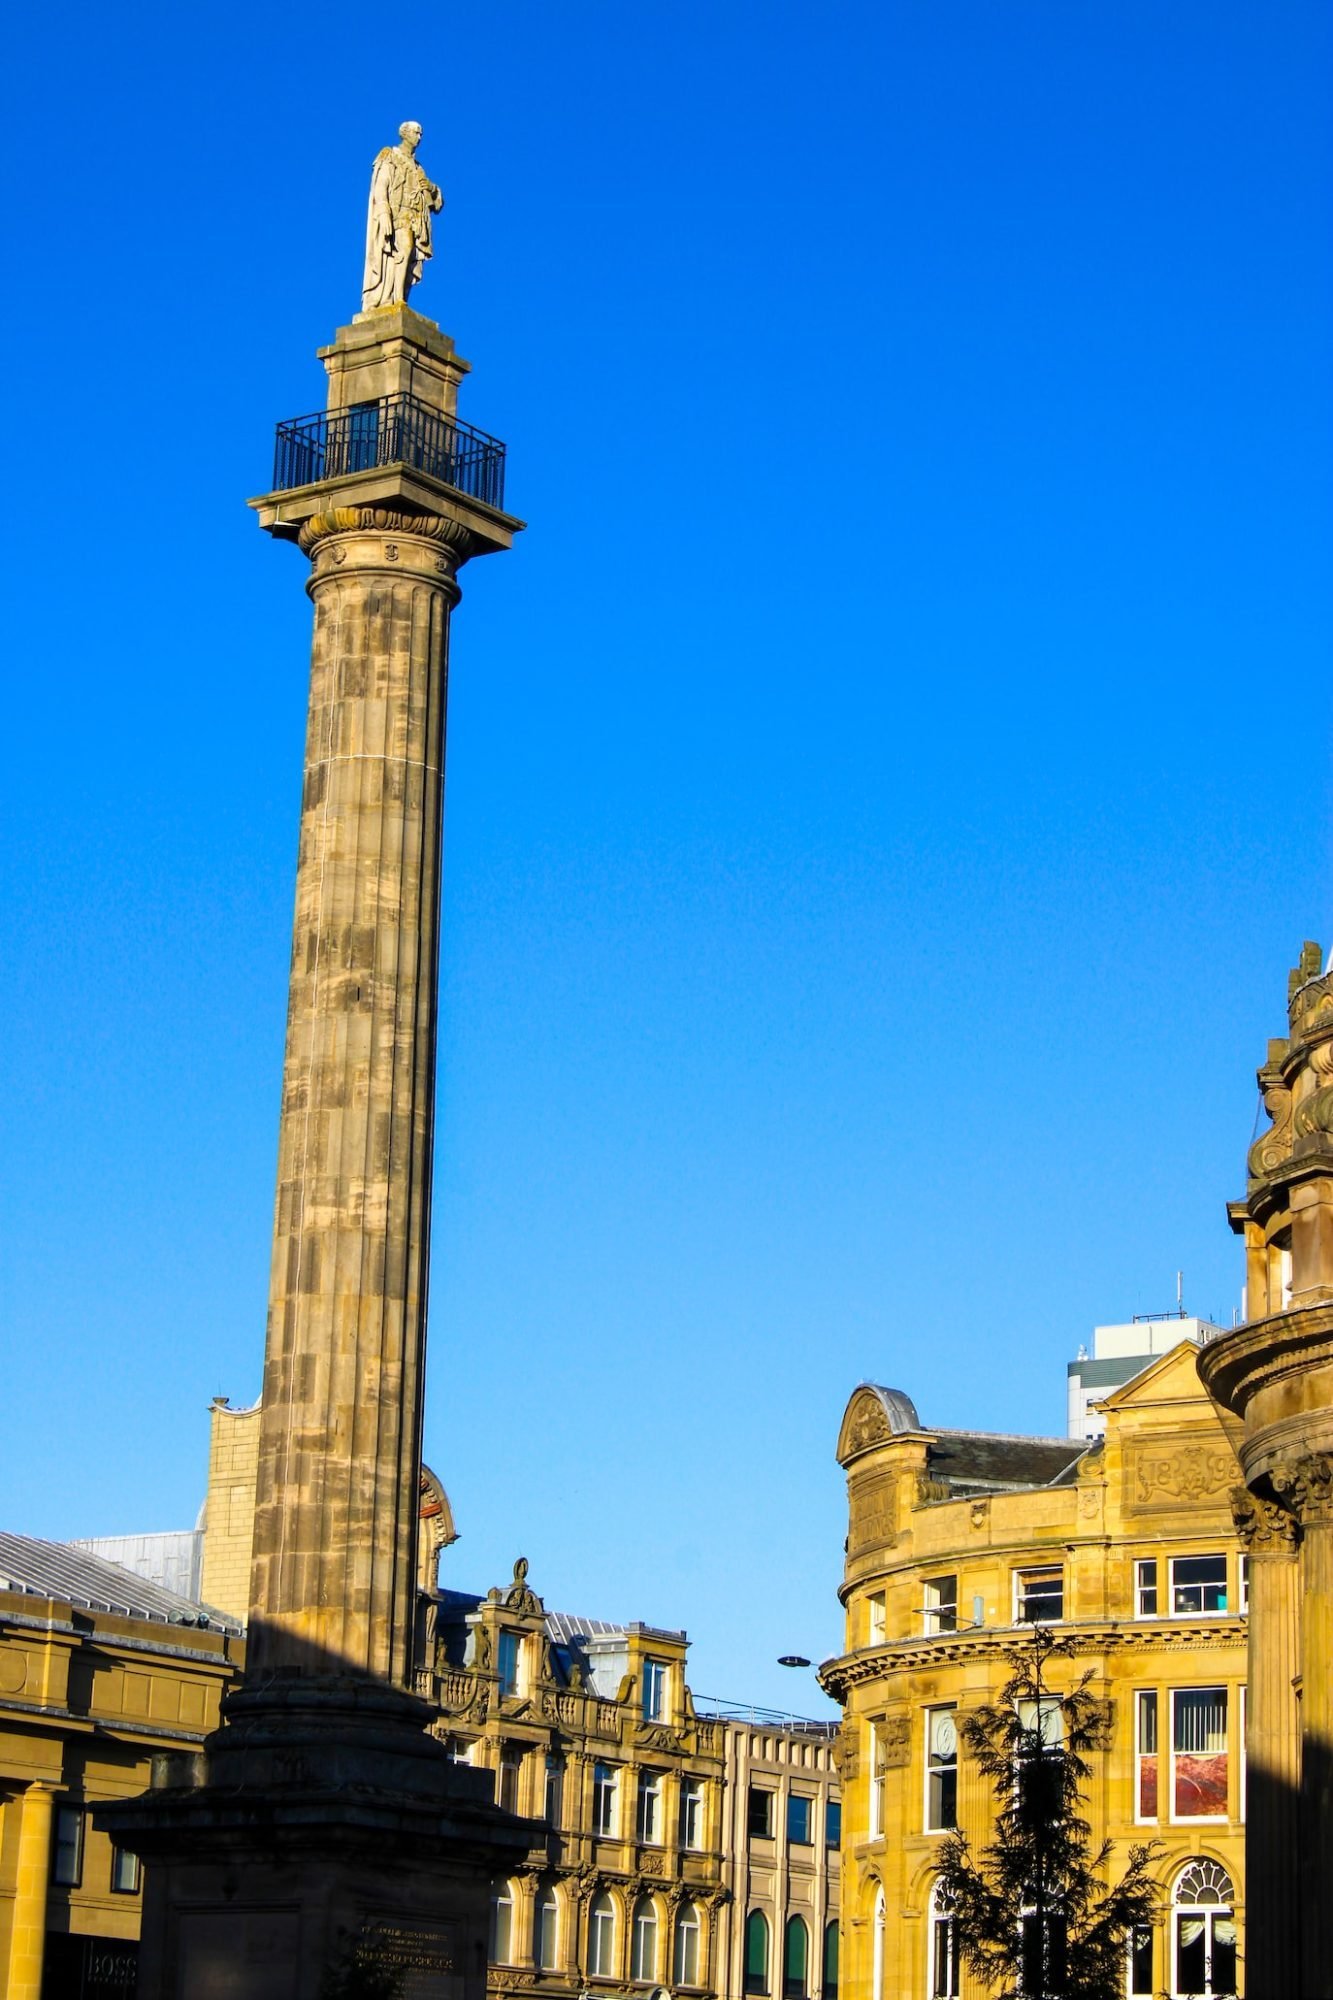 Understanding the Industrial Heritage of Newcastle upon Tyne